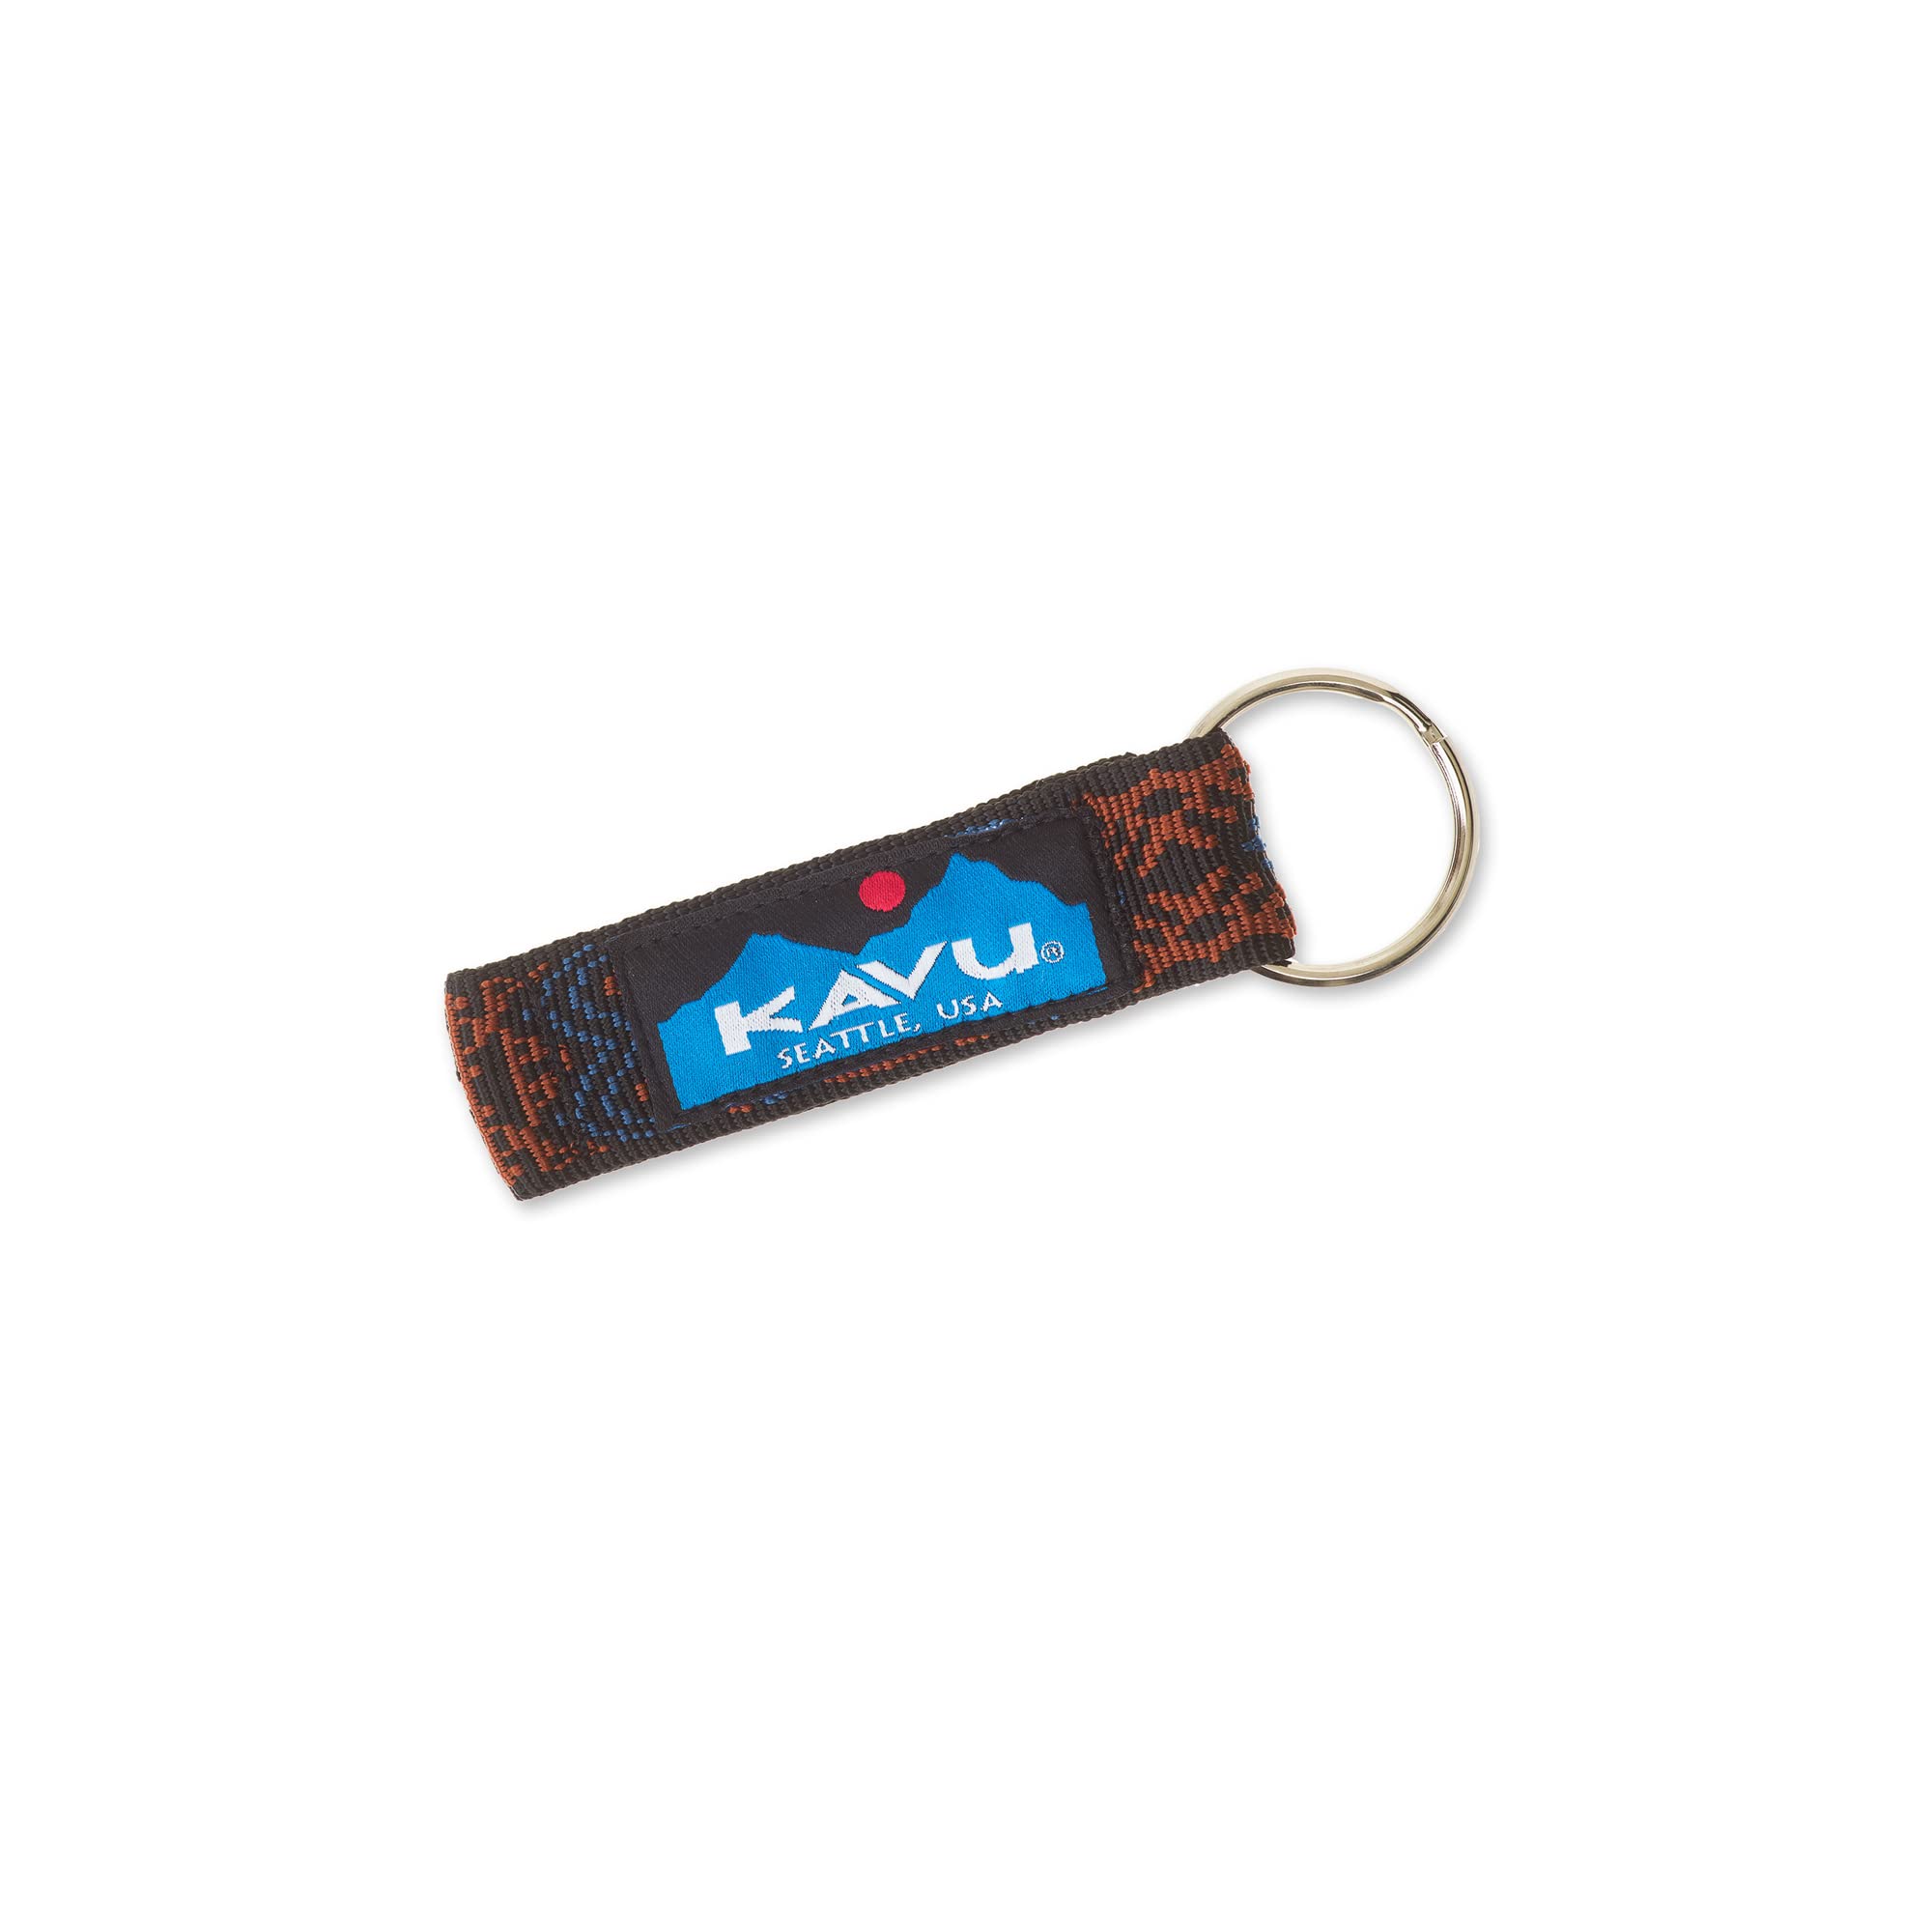 KAVU Keychain: Compact and Stylish Key Organizer with Durable Strap